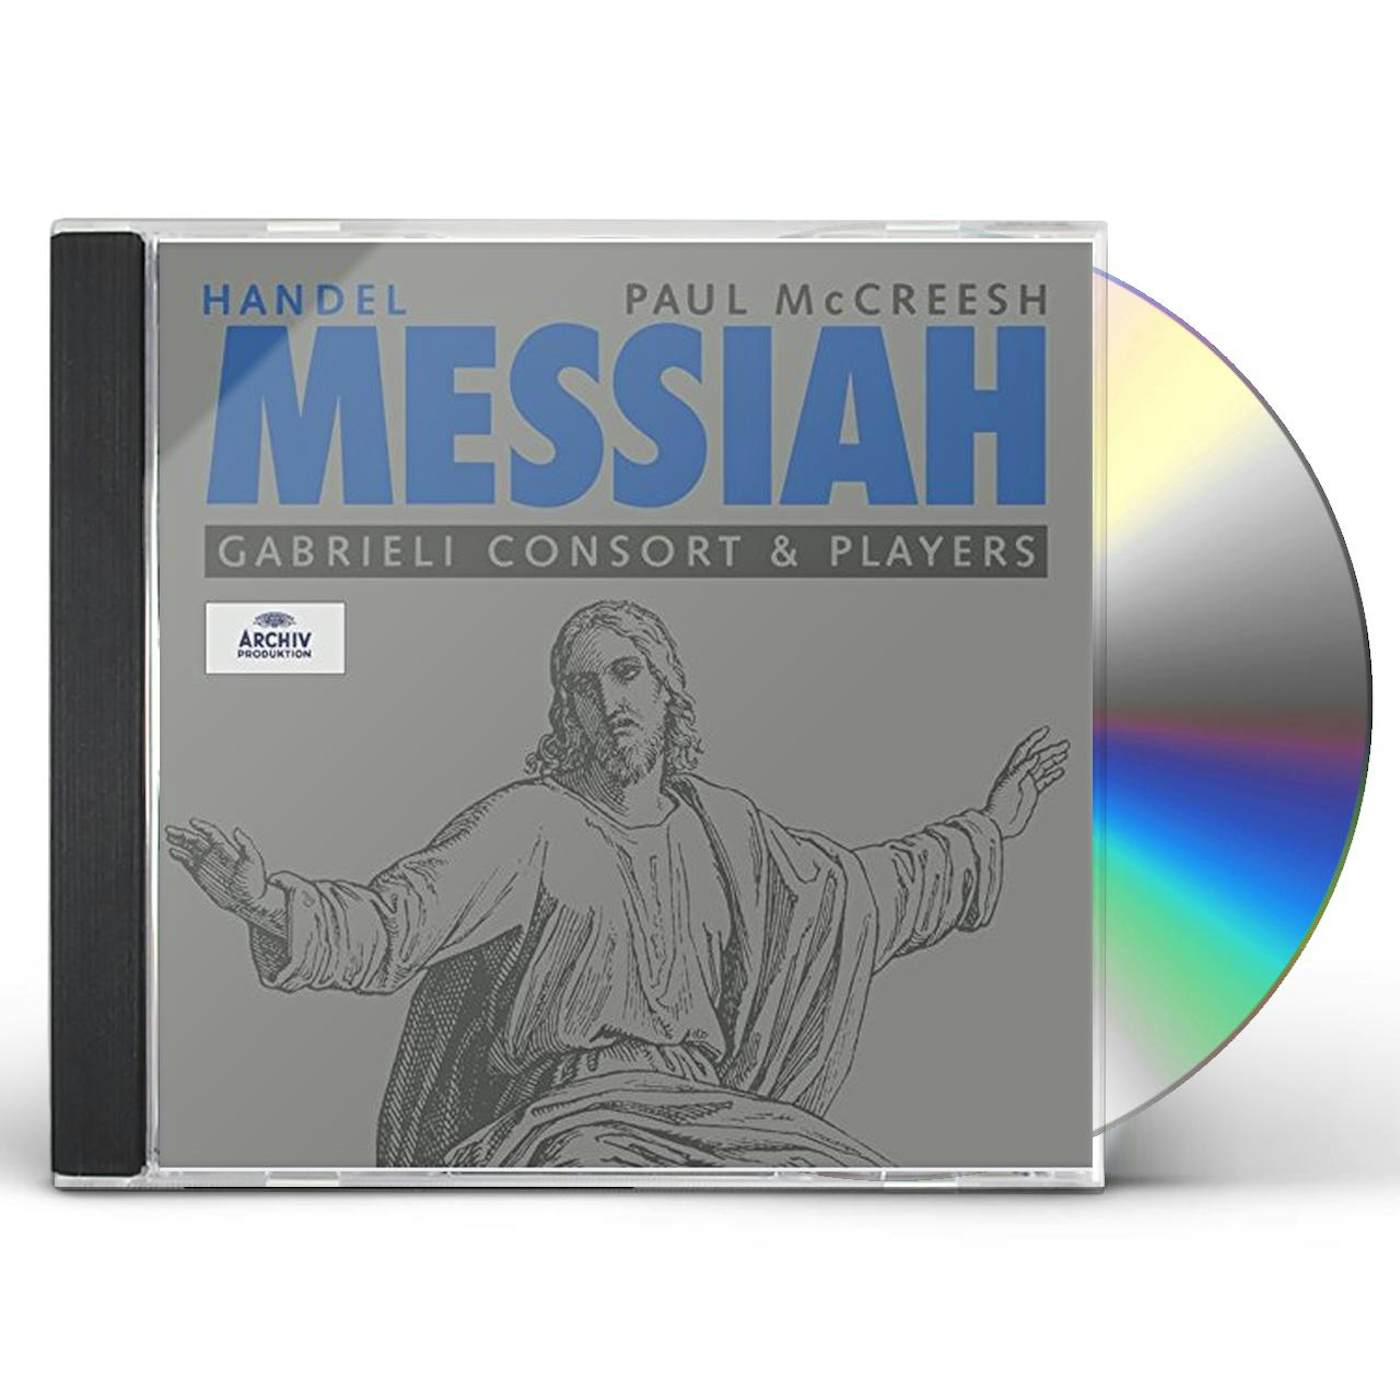 Paul McCreesh HANDEL: MESSIAH CD